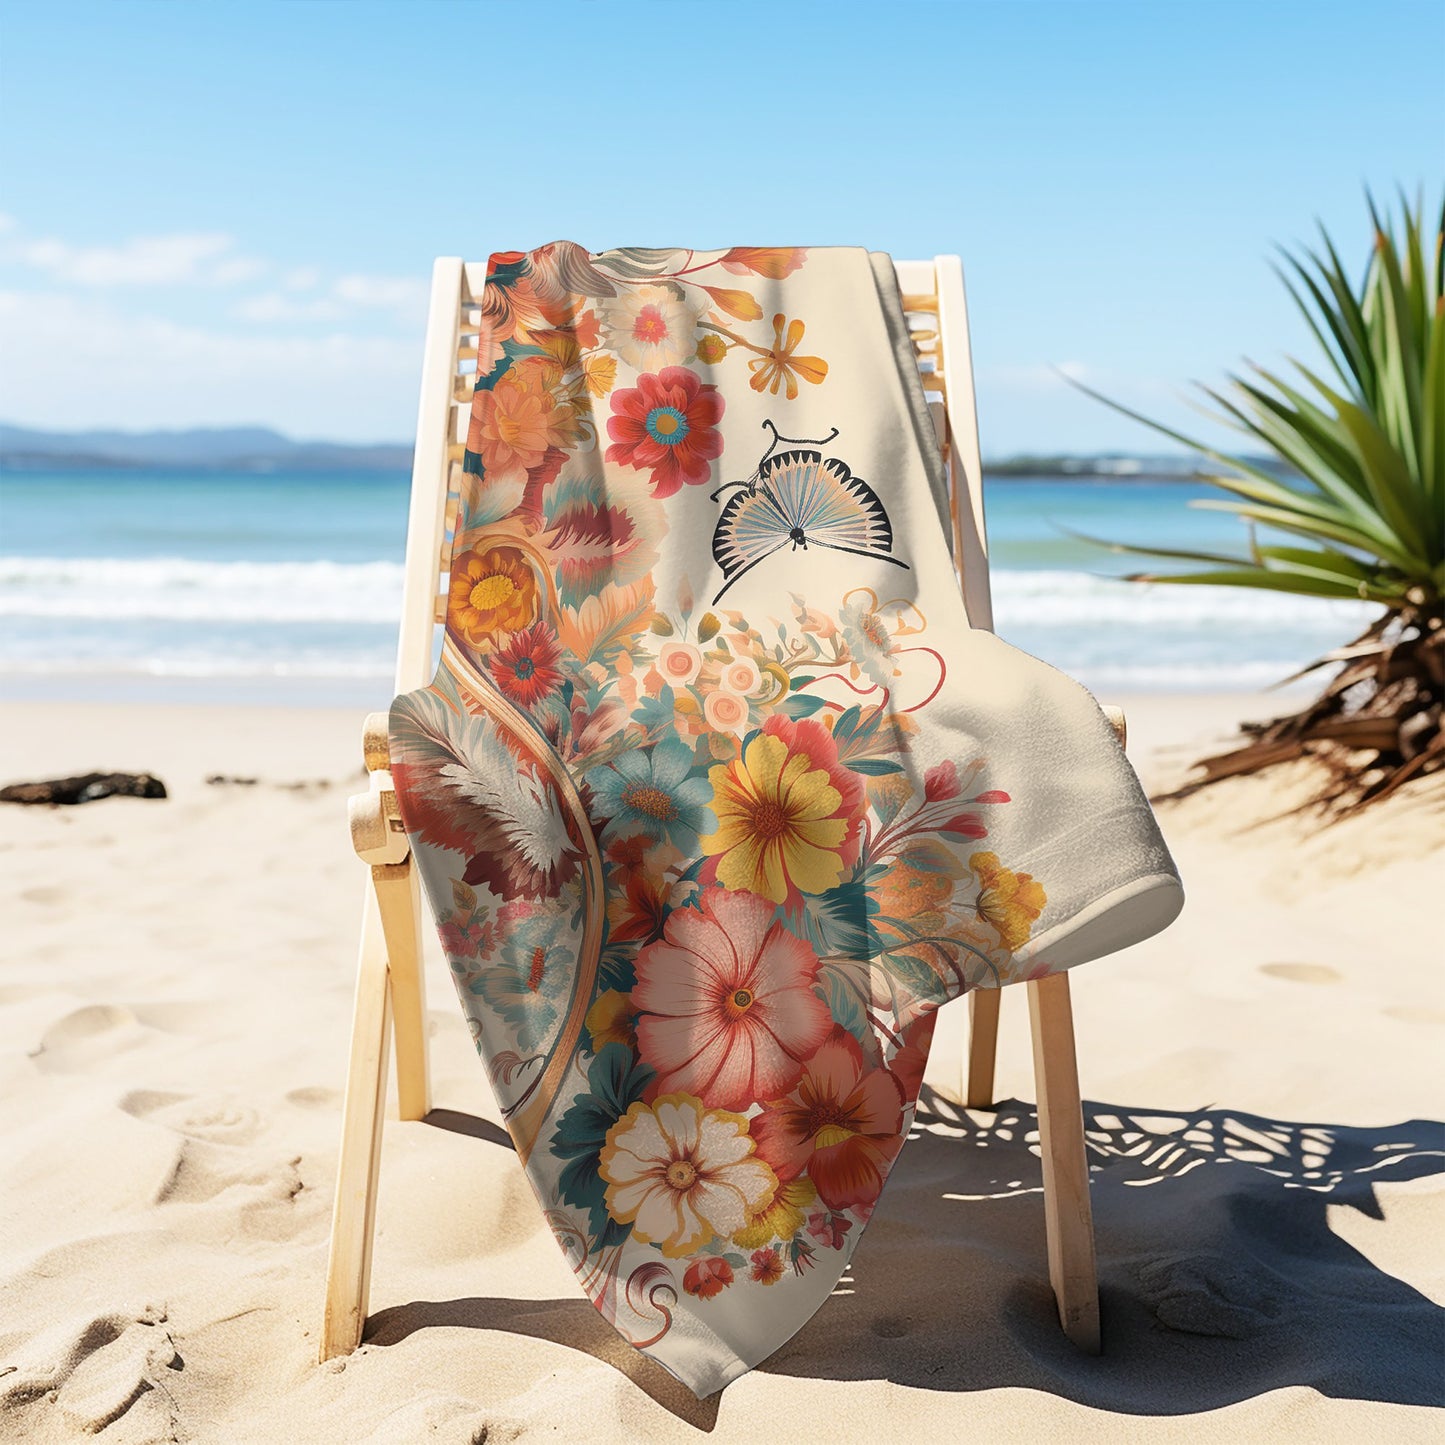 Bohemian Art Beach Cloth Shawl: Versatile Use Towel, Blanket, Shawl, Cover-up - FlooredByArt